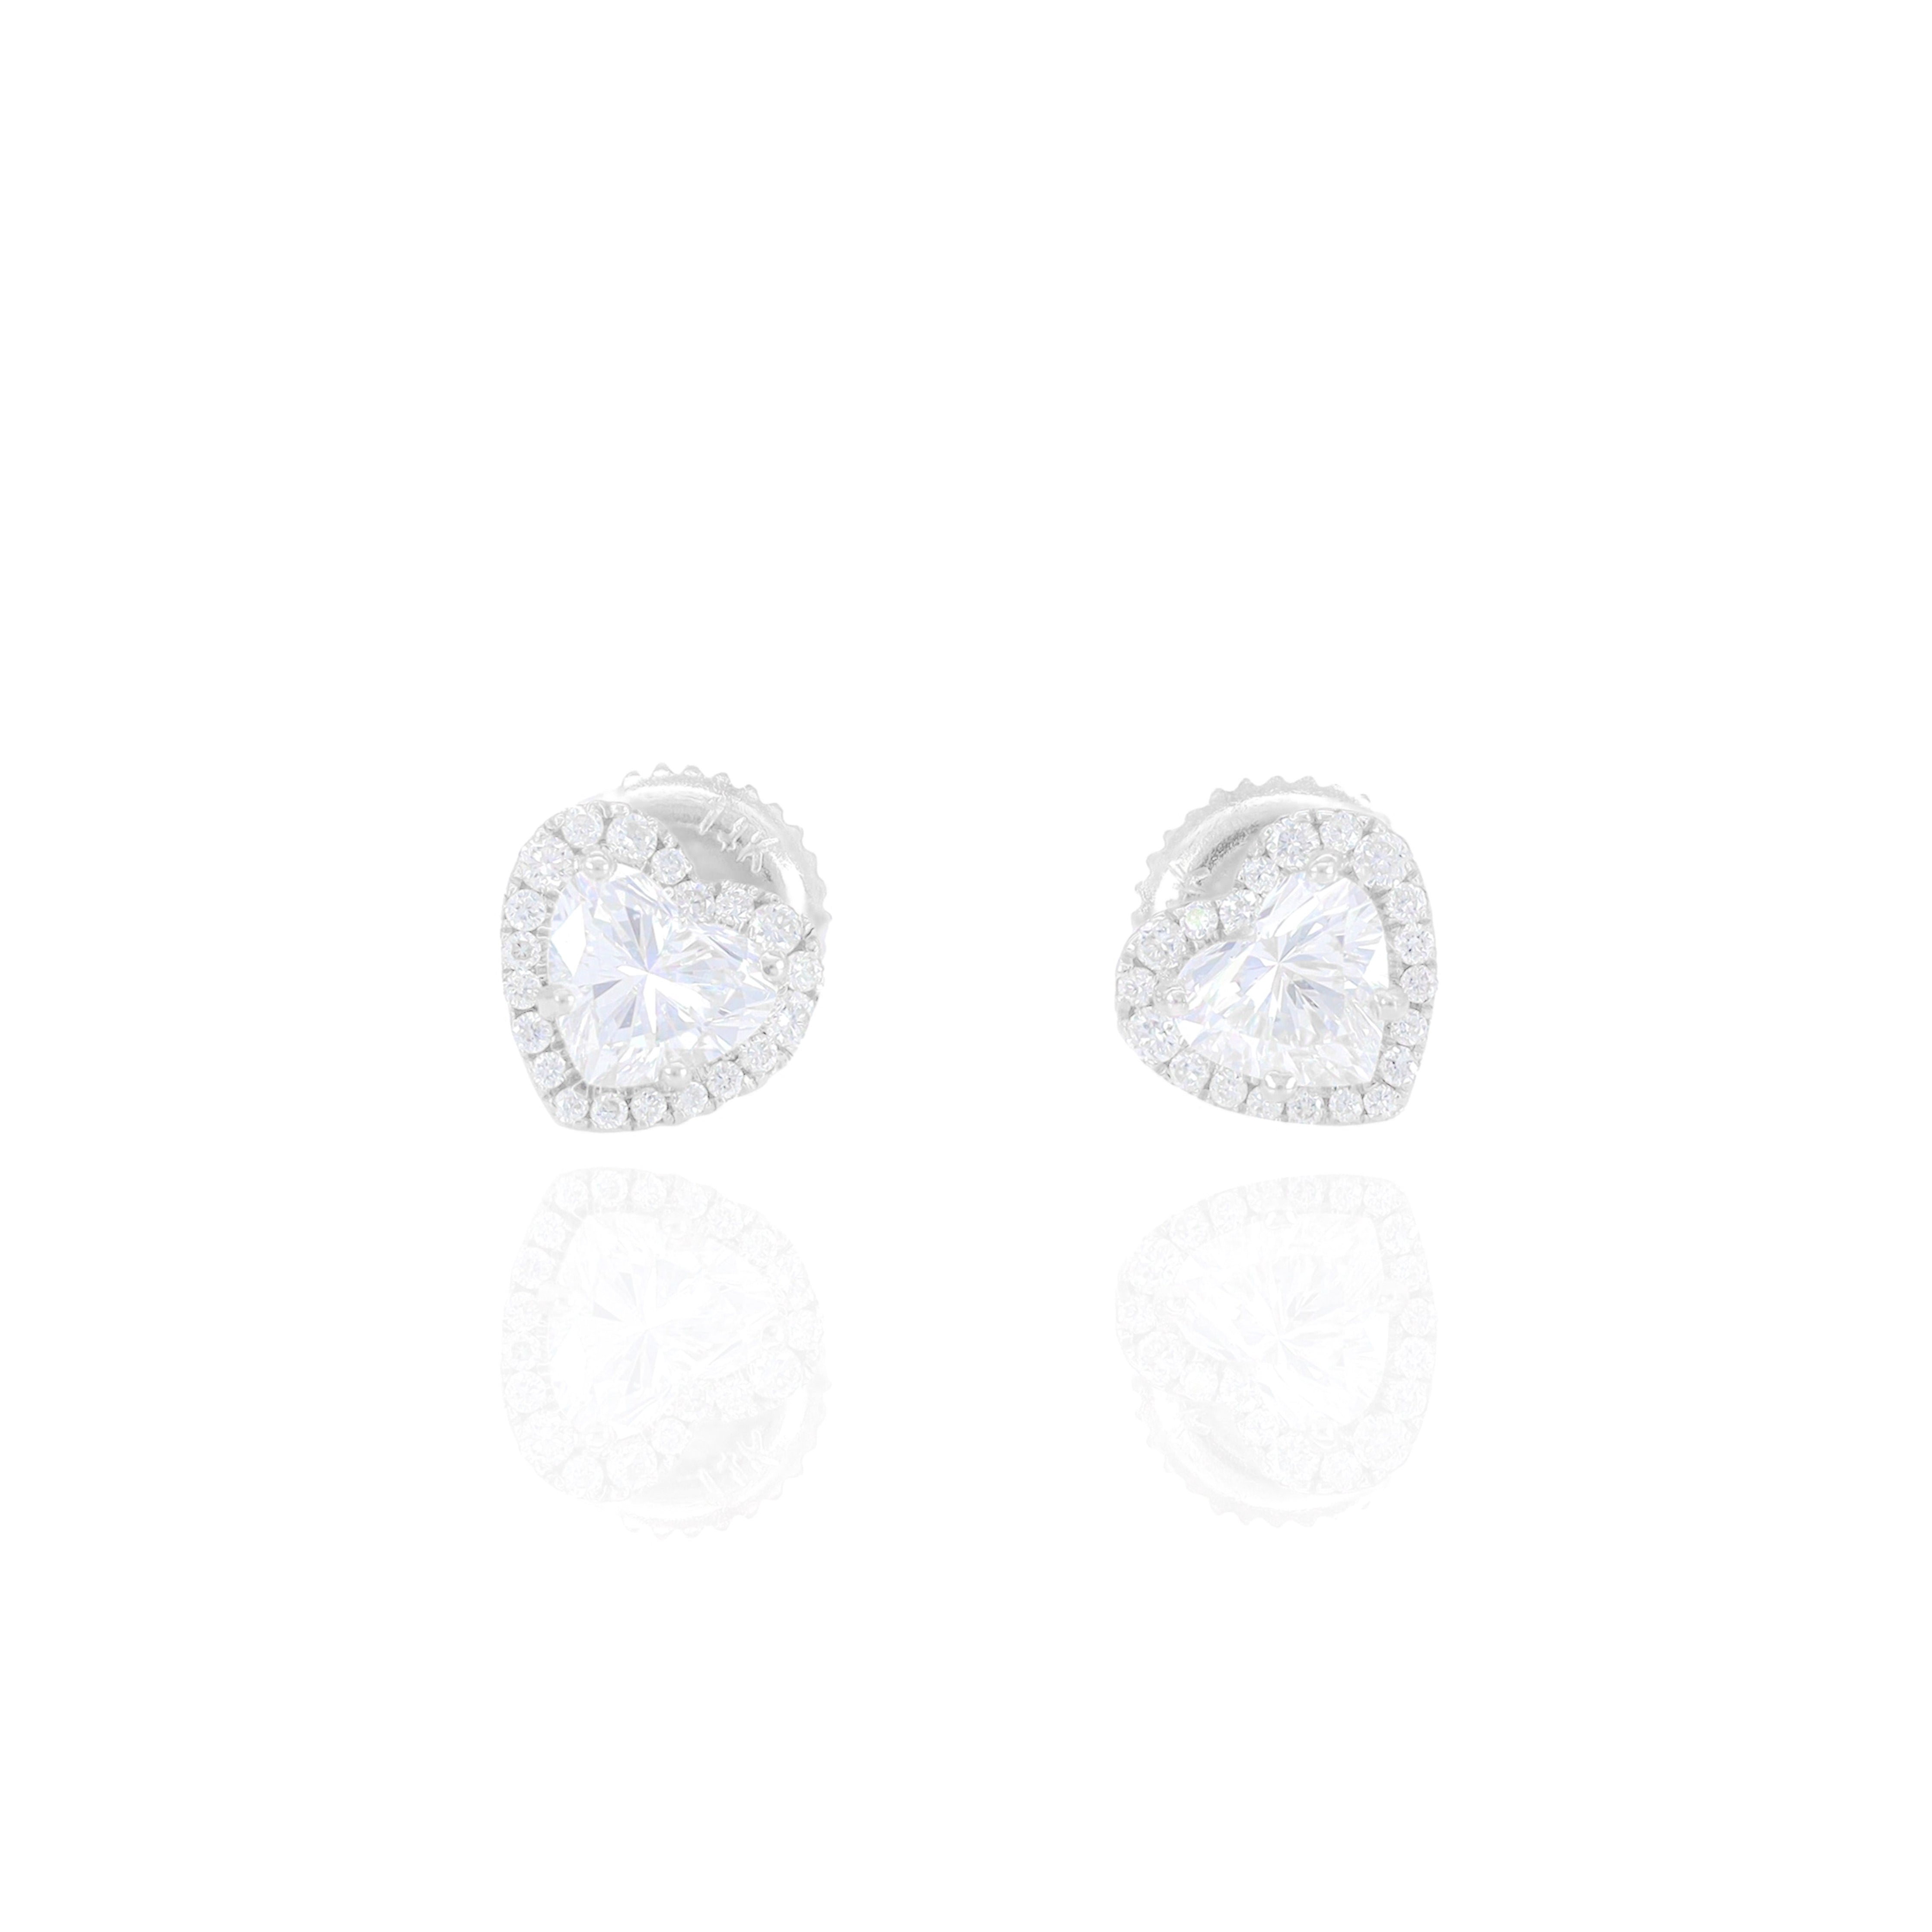 30 Pointer Heart Shaped Diamond Earrings